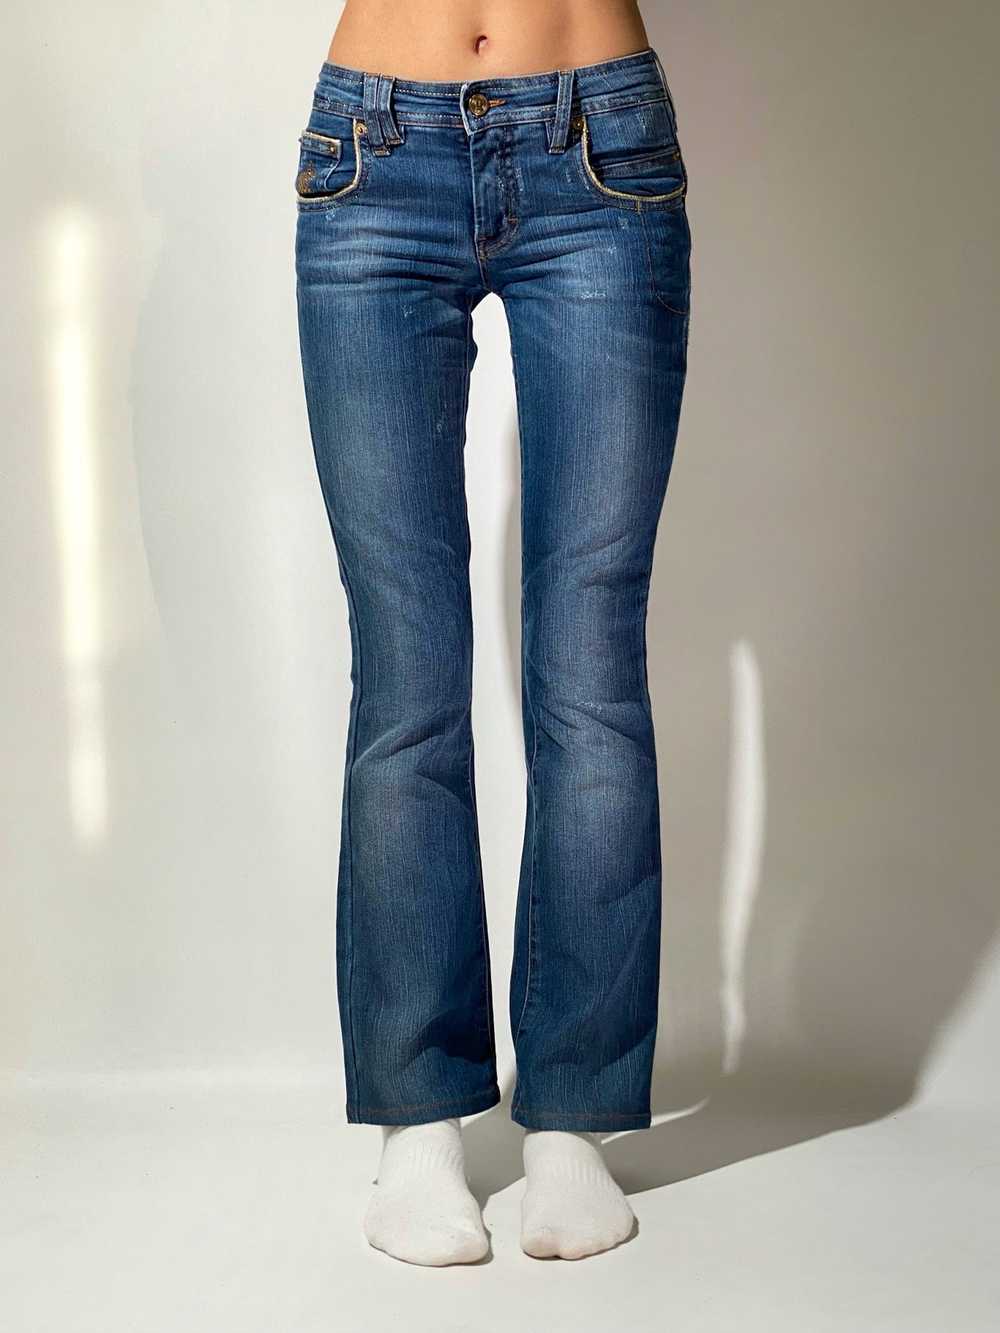 John Galliano John Galliano vintage blue jeans - image 5